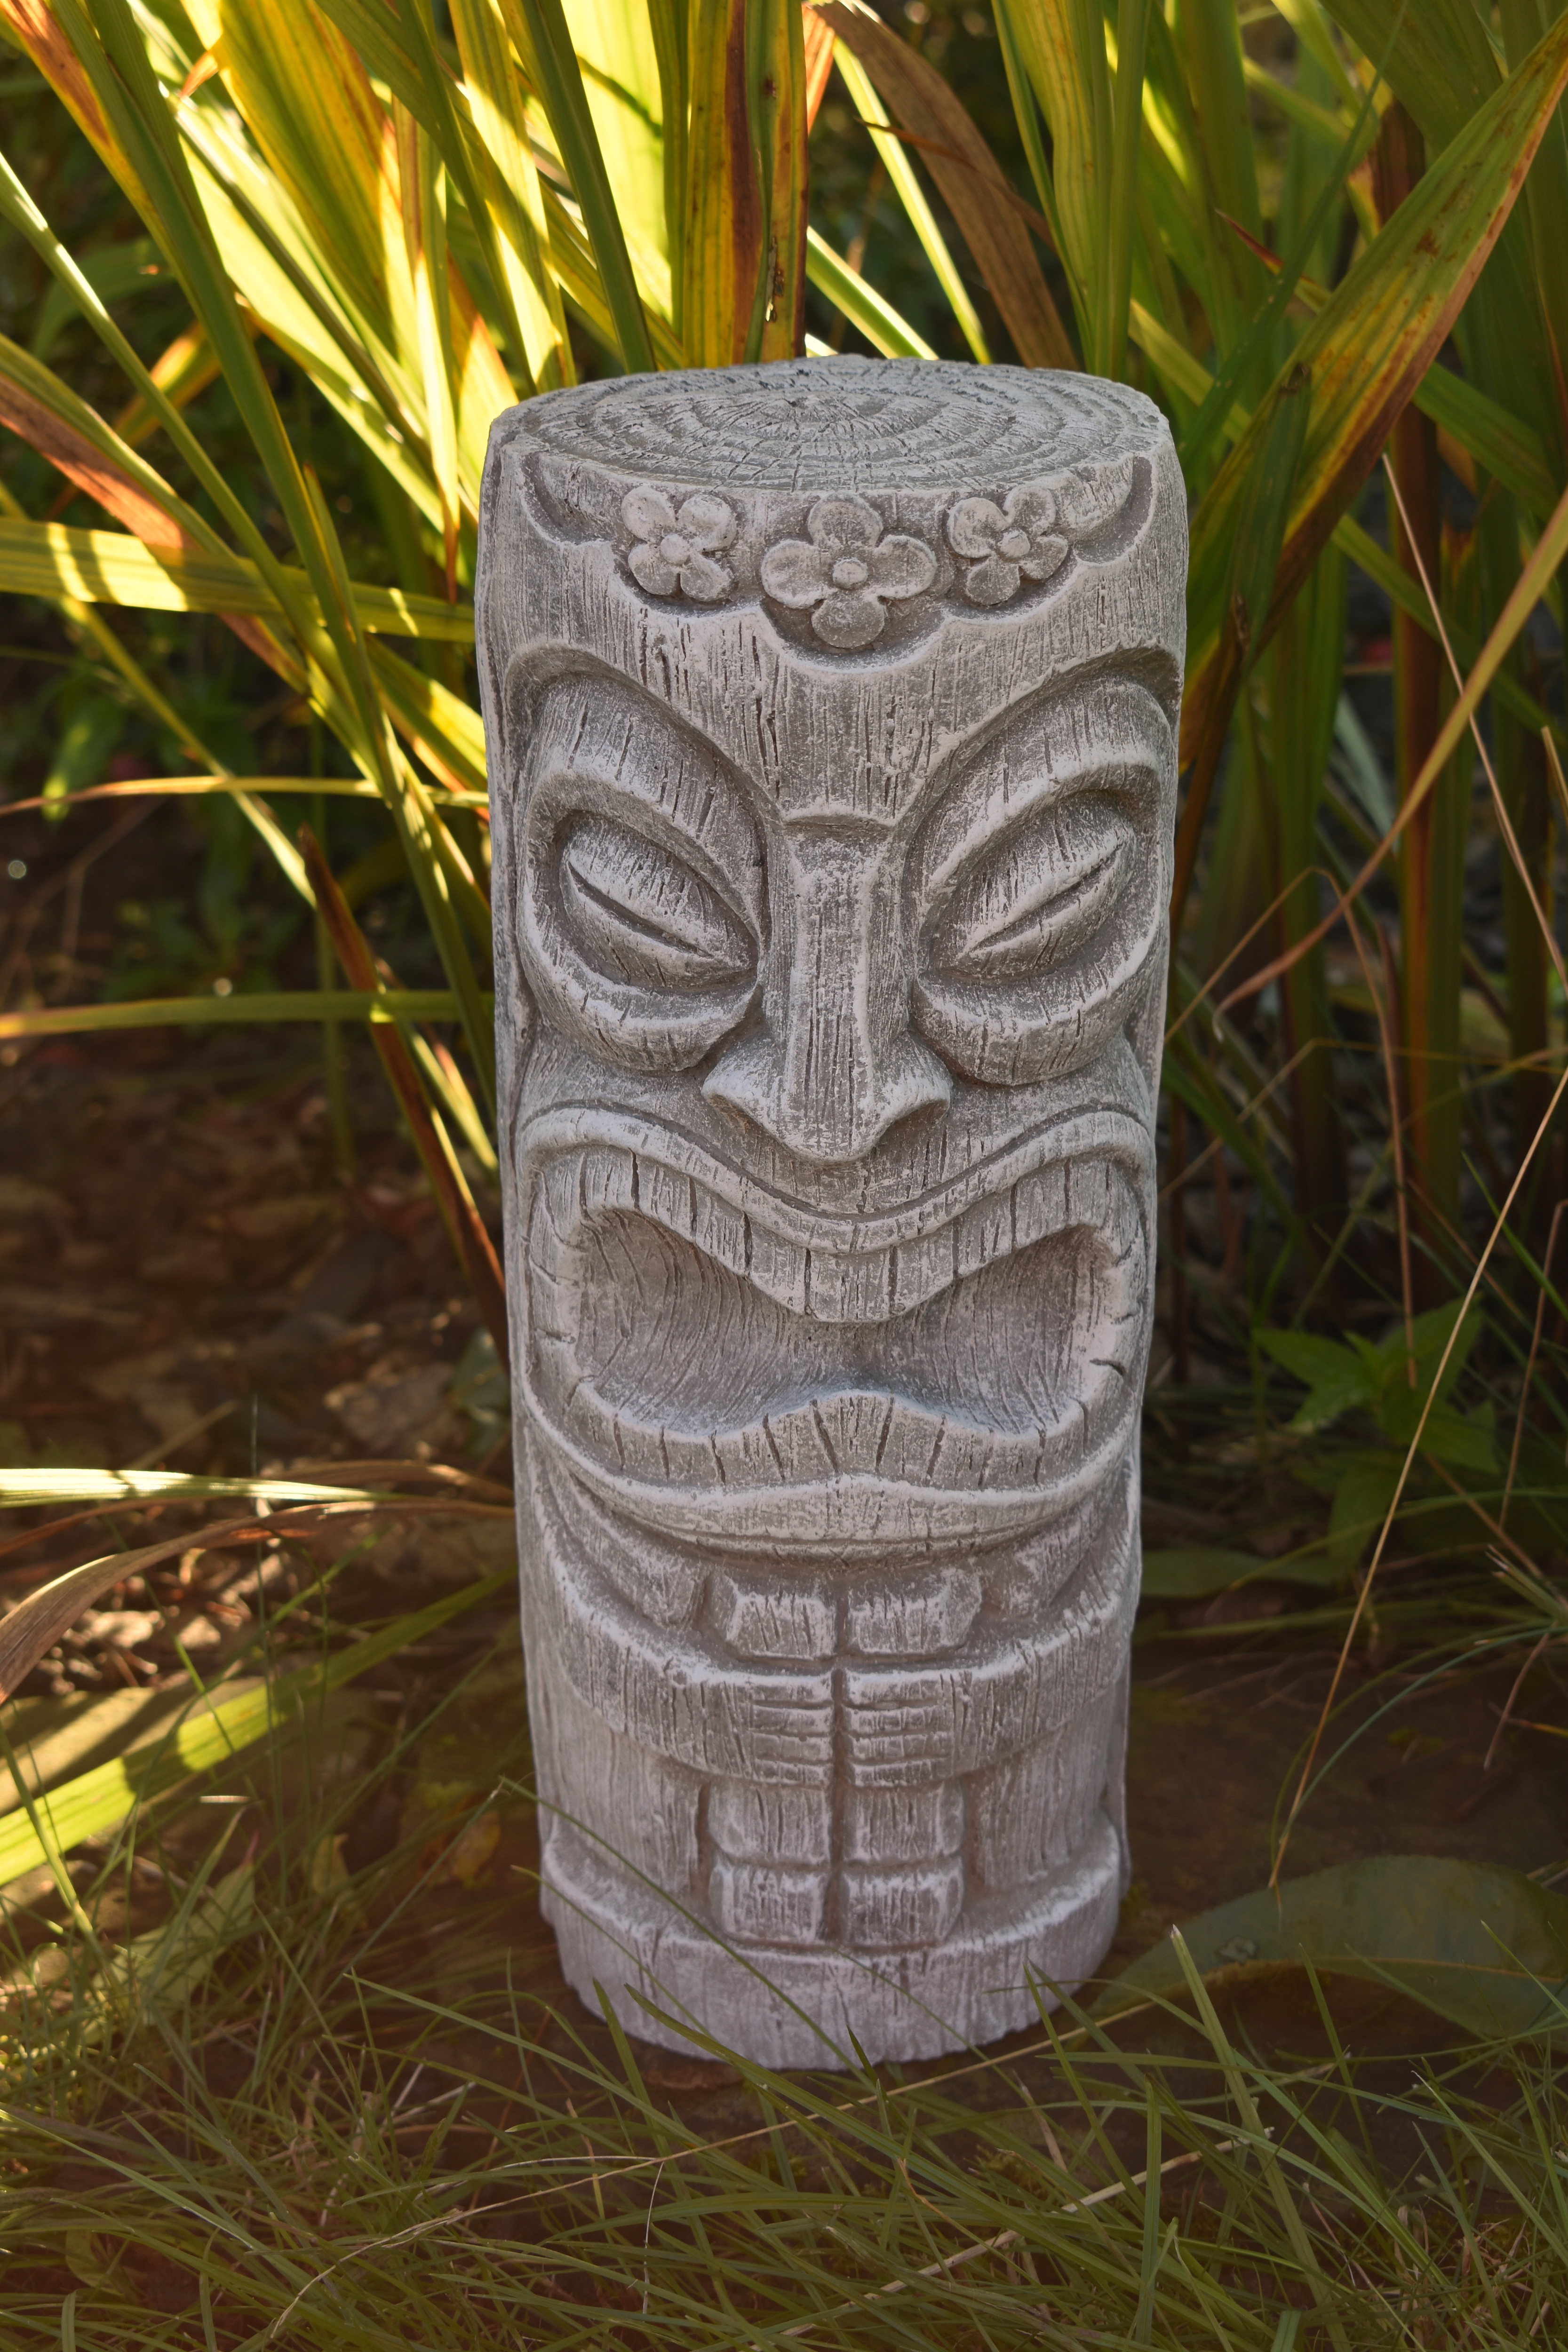 Blumentiki "Hawaiian" XL Empalili steinfigur